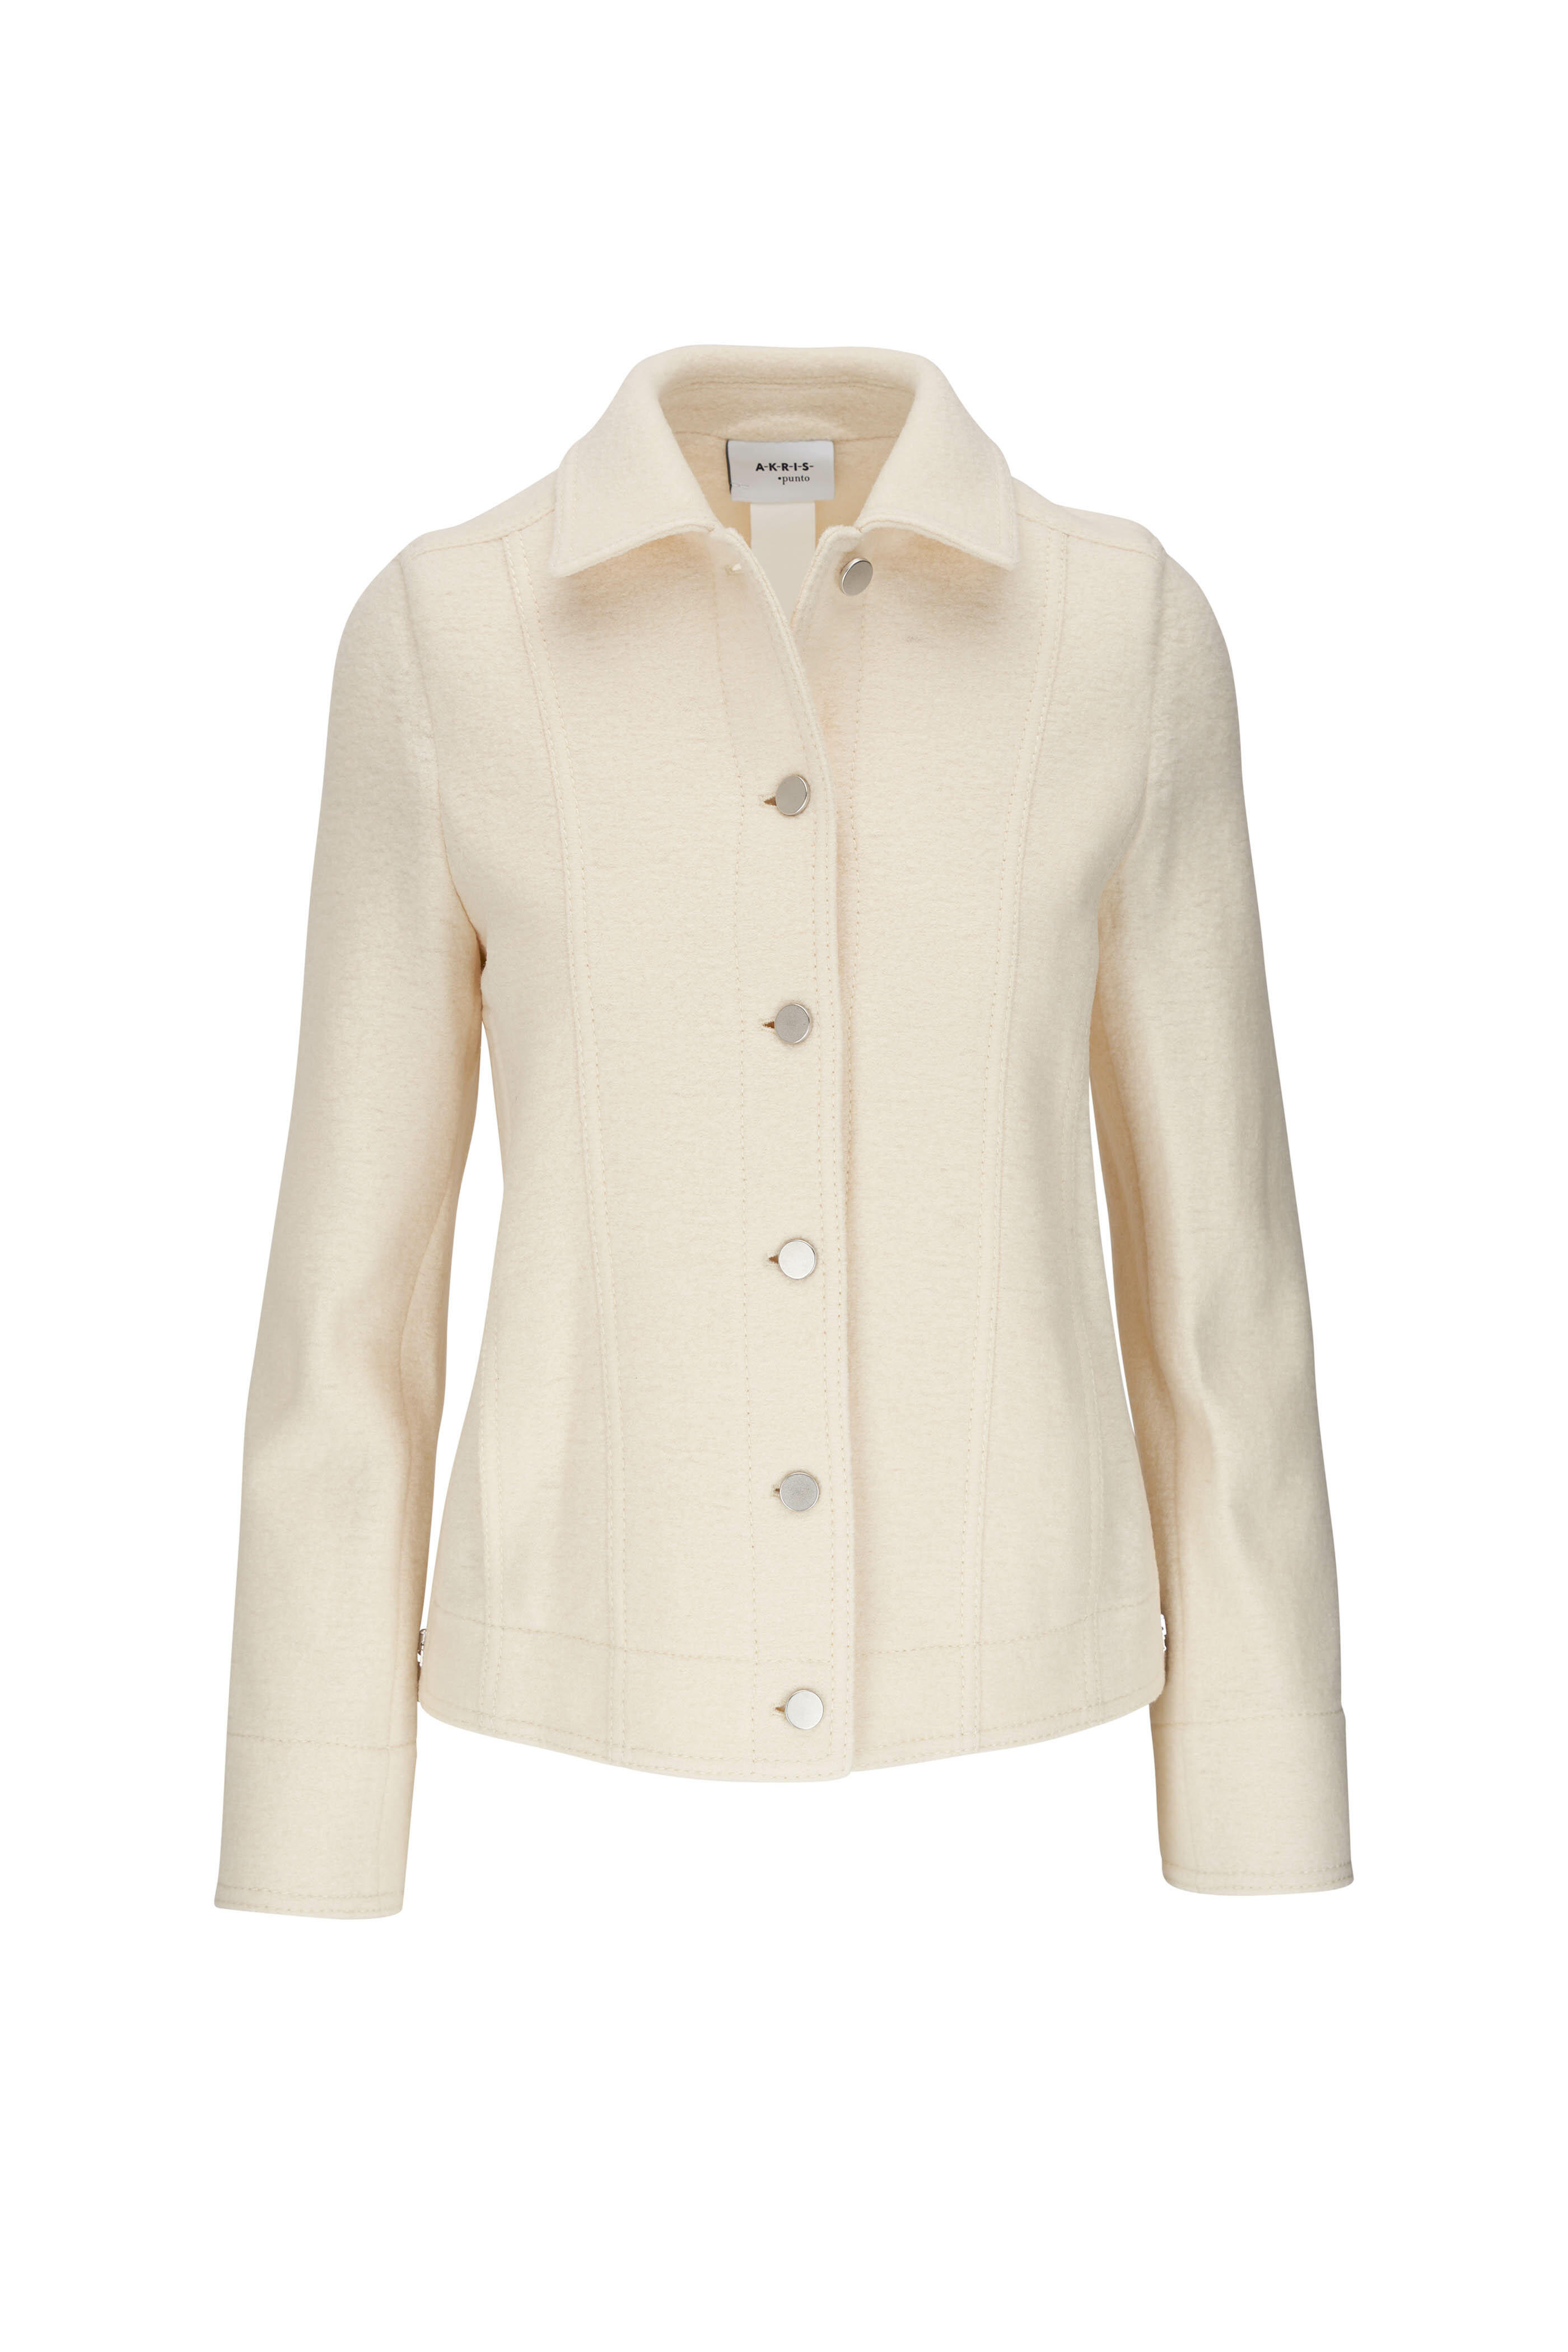 Akris Punto - Cream Denim Style Wool Jacket | Mitchell Stores